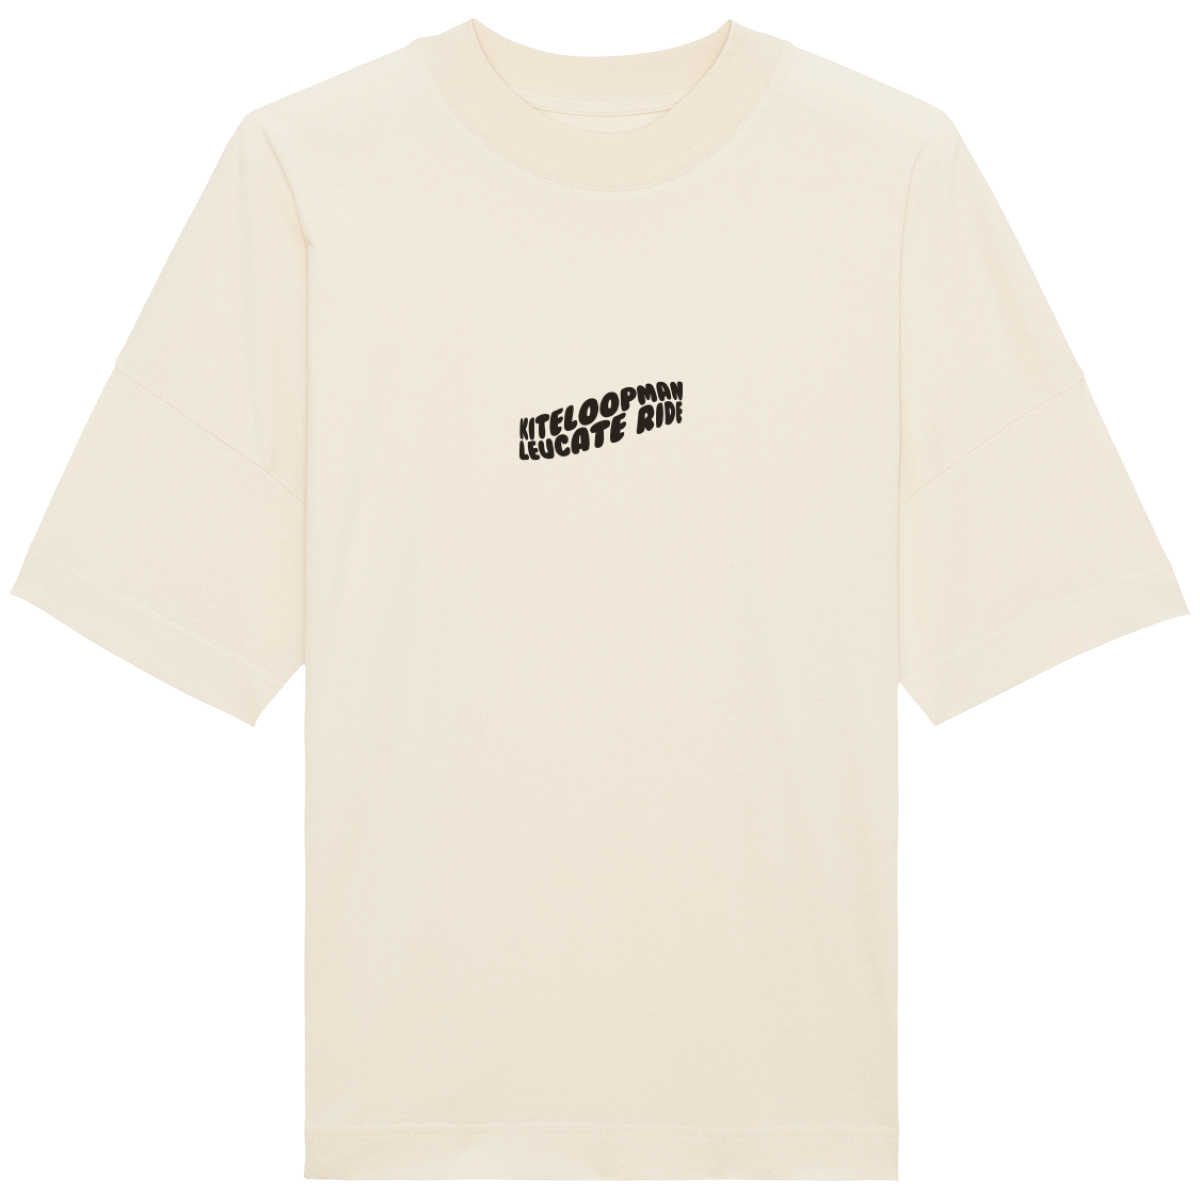 T-Shirt Oversize Kiteloopman Beige